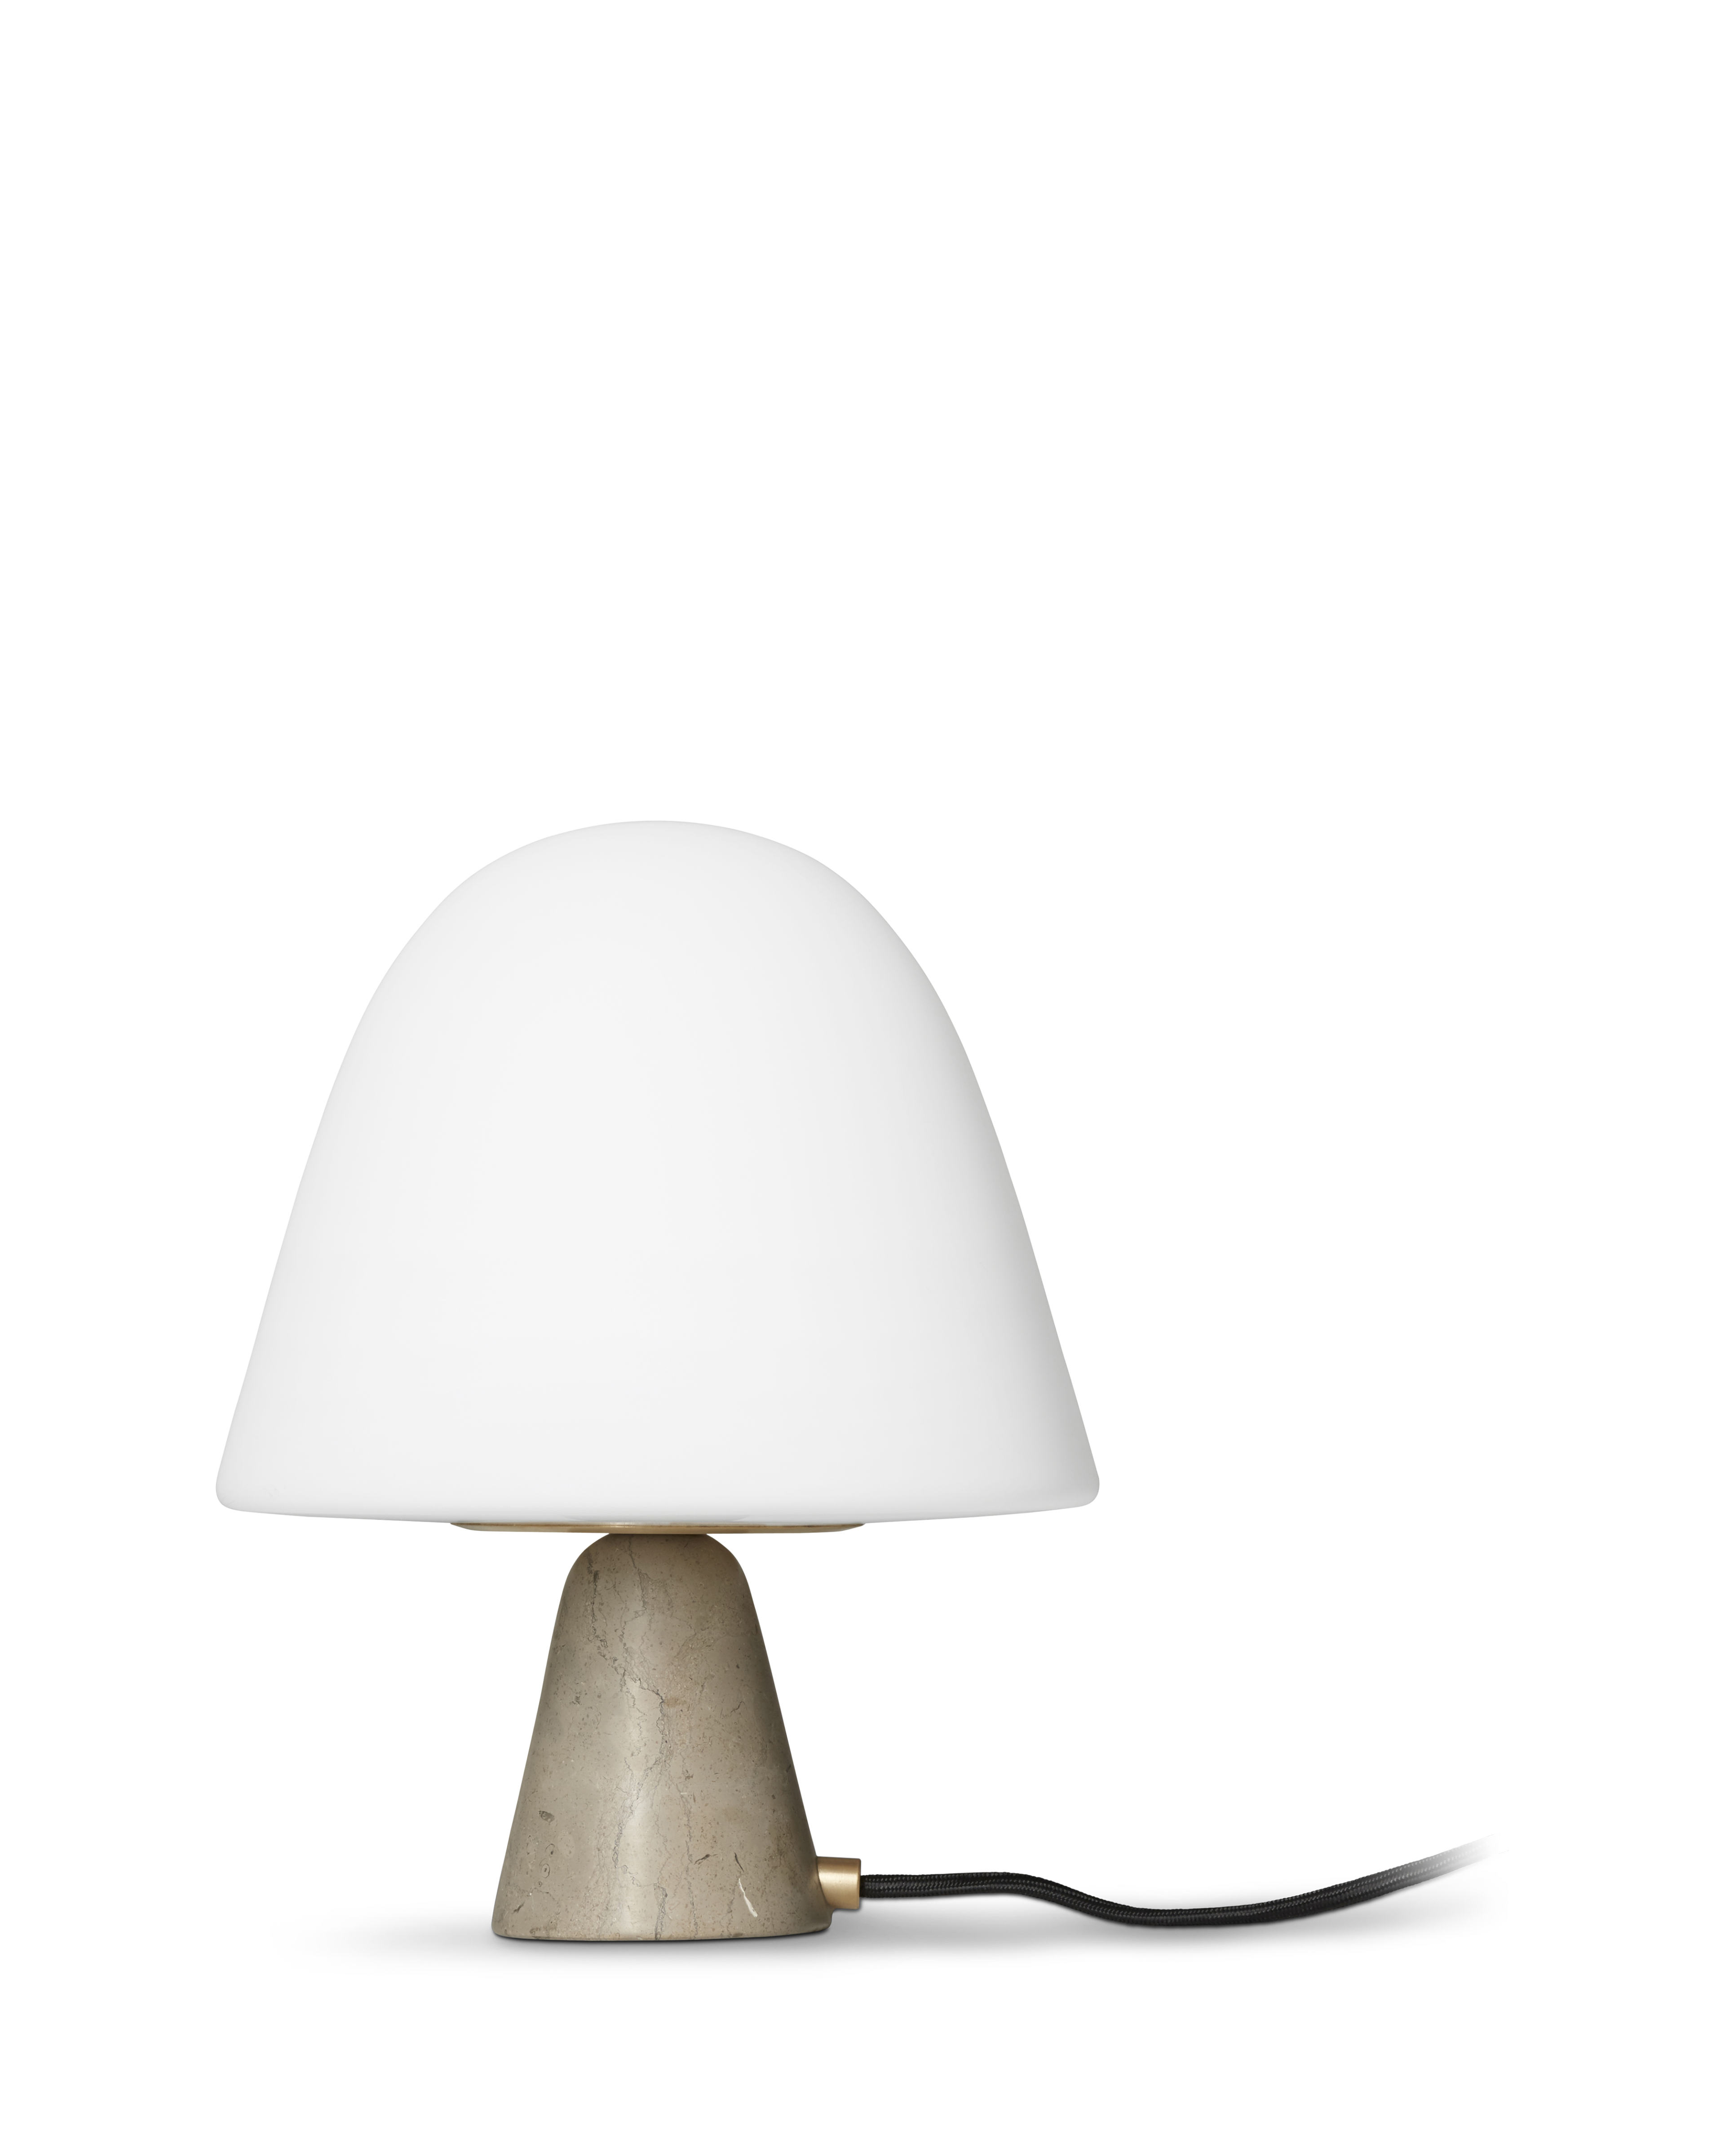 Meadow Lamp - Dark Atlantico Limestone / Hvidt opalglas